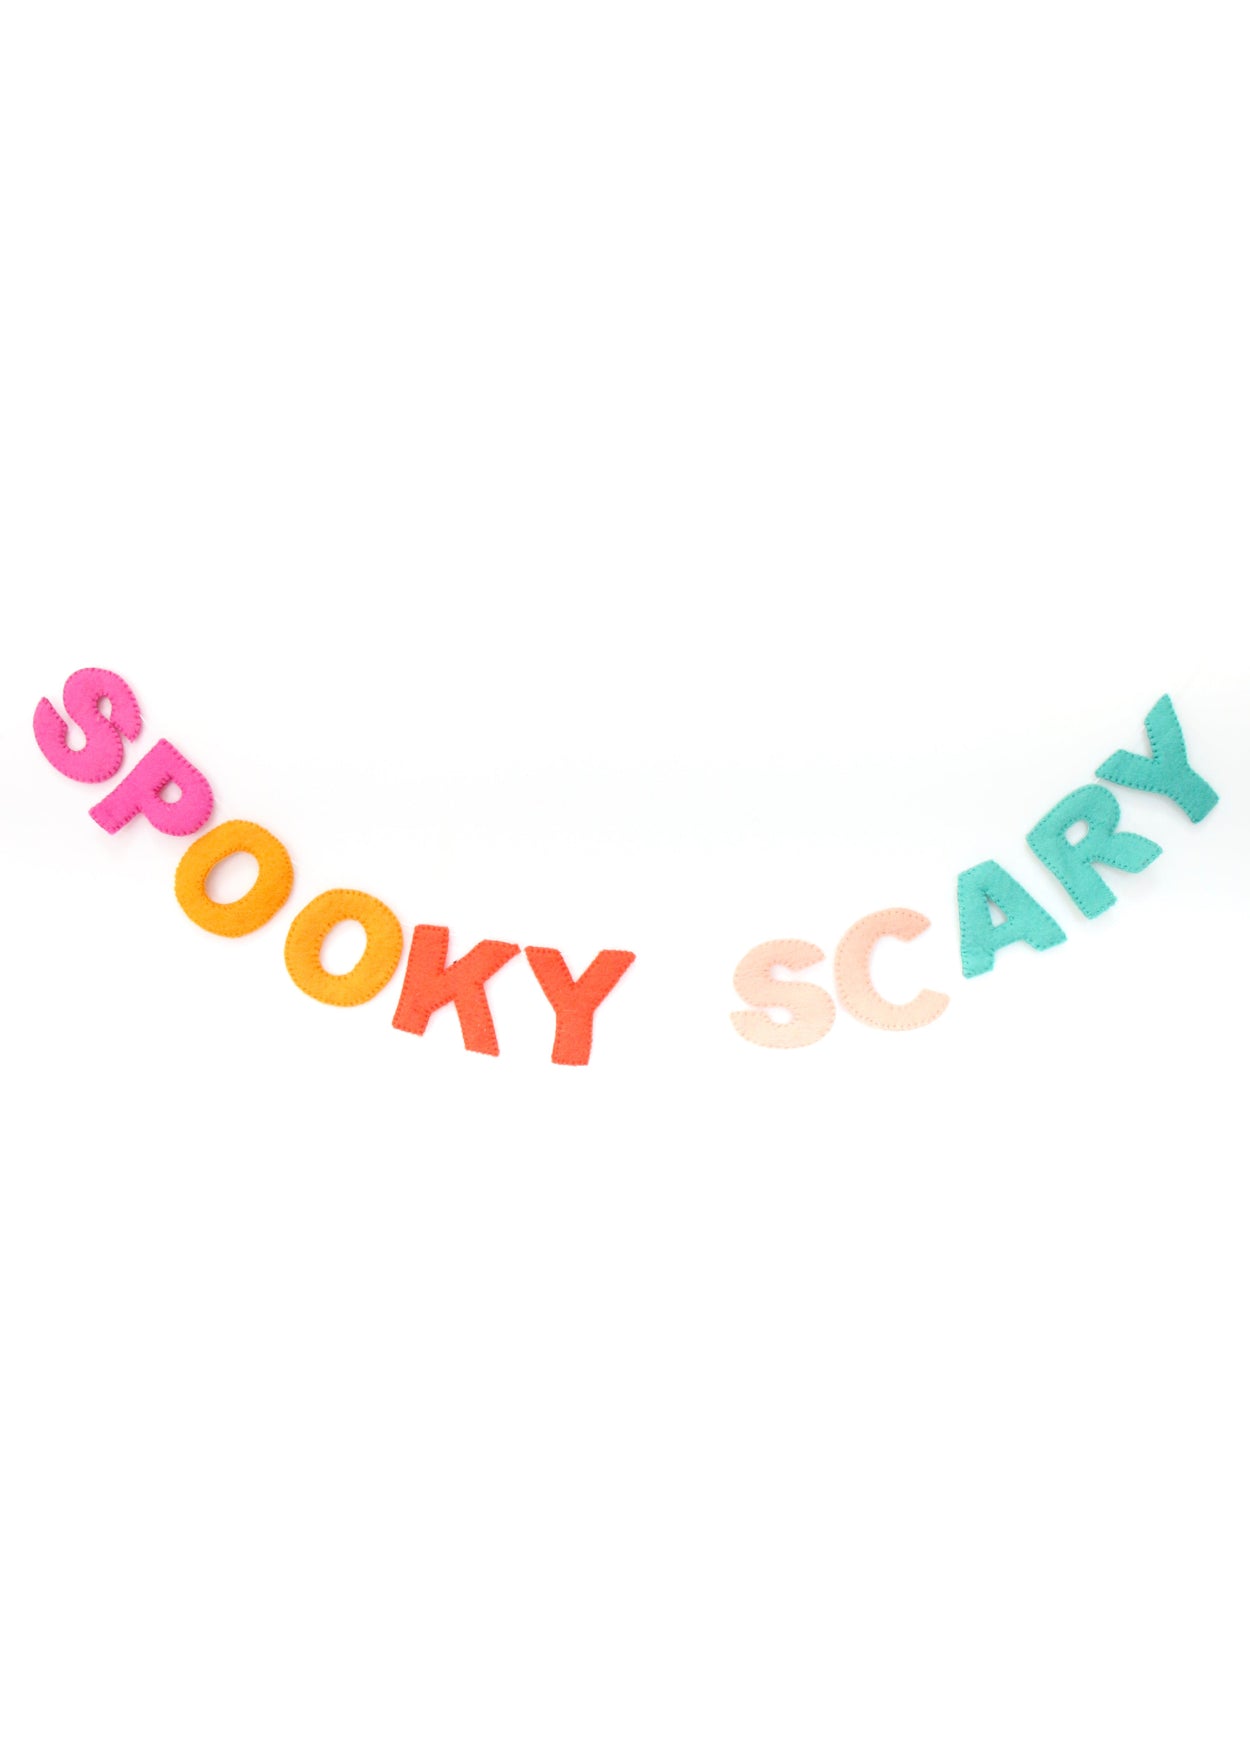 "Spooky Scary" Halloween Felt Garland